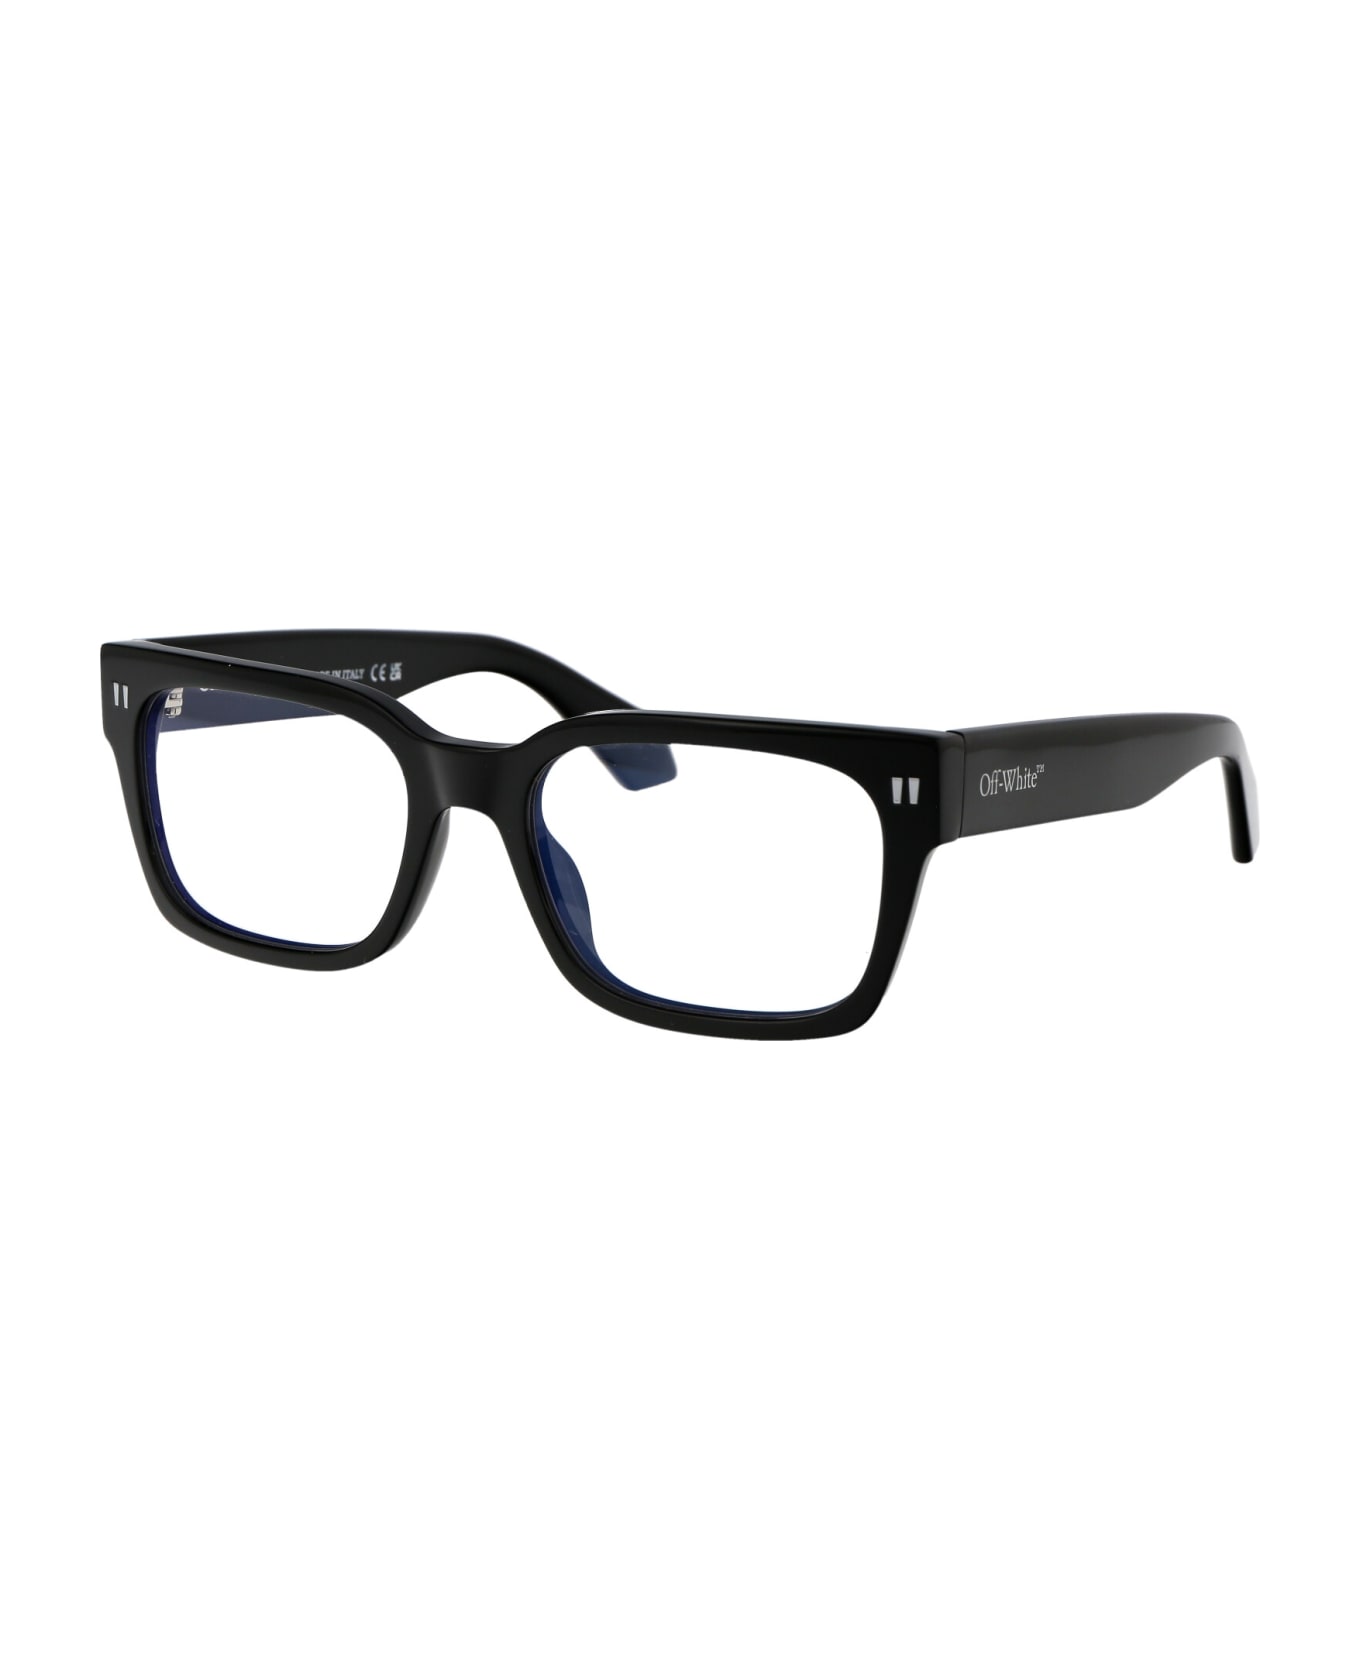 Off-White Optical Style 53 Glasses - 1000 BLACK